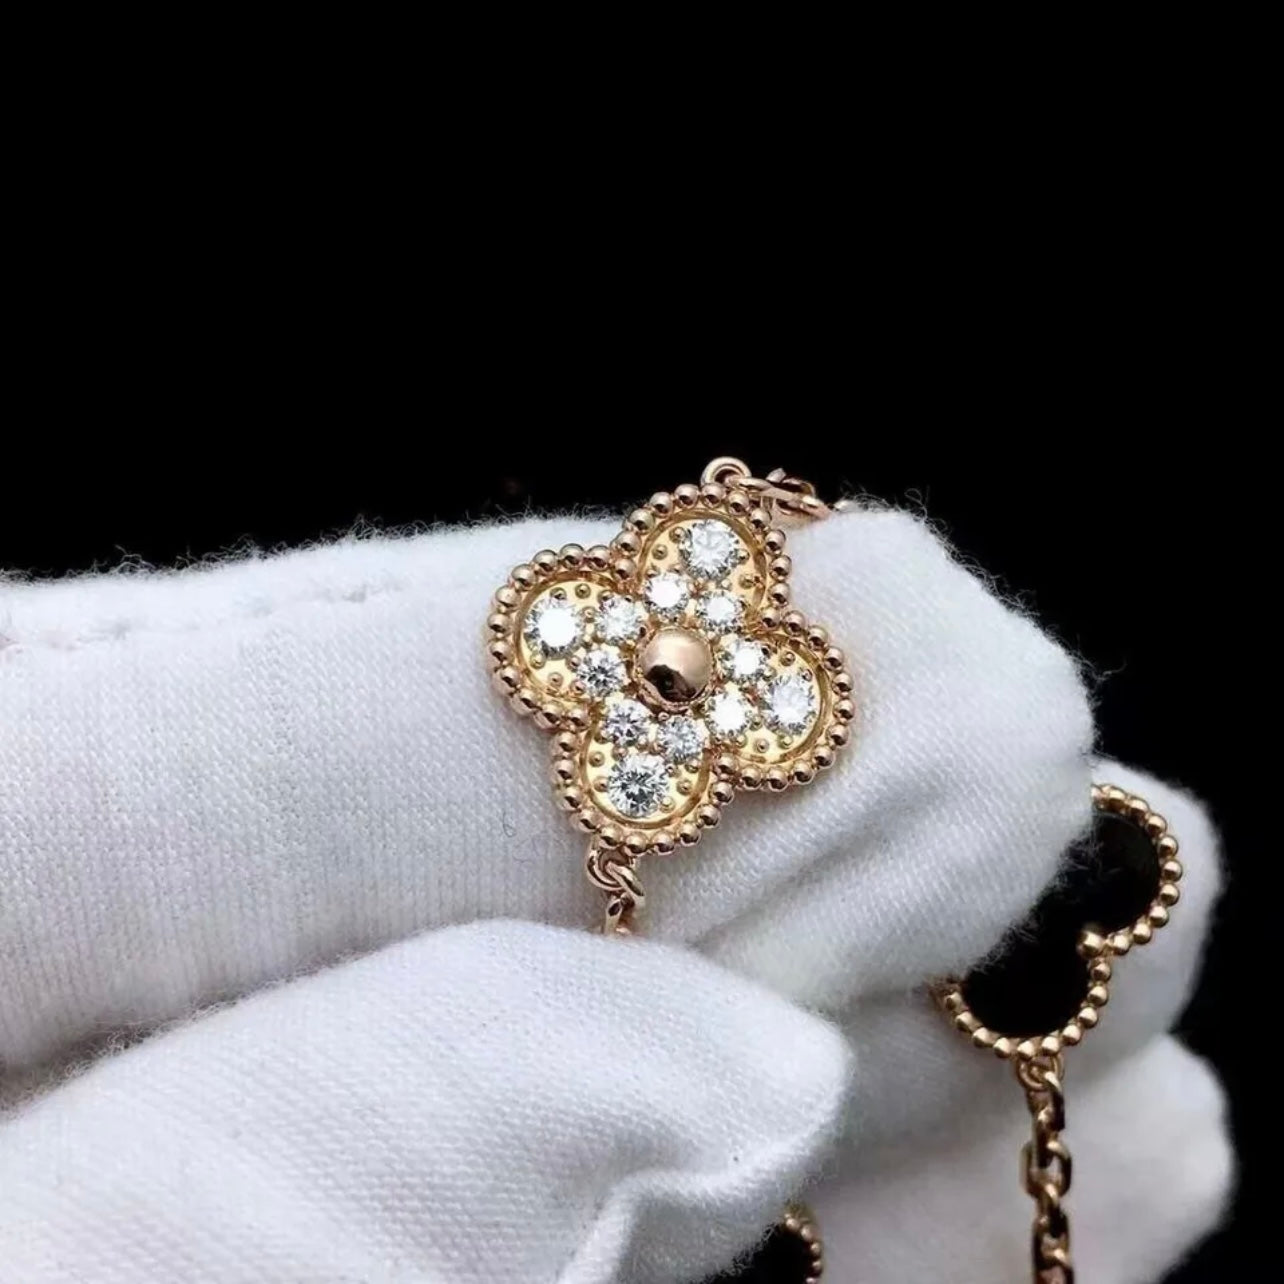 5 Motif Clover Bracelet with Diamonds